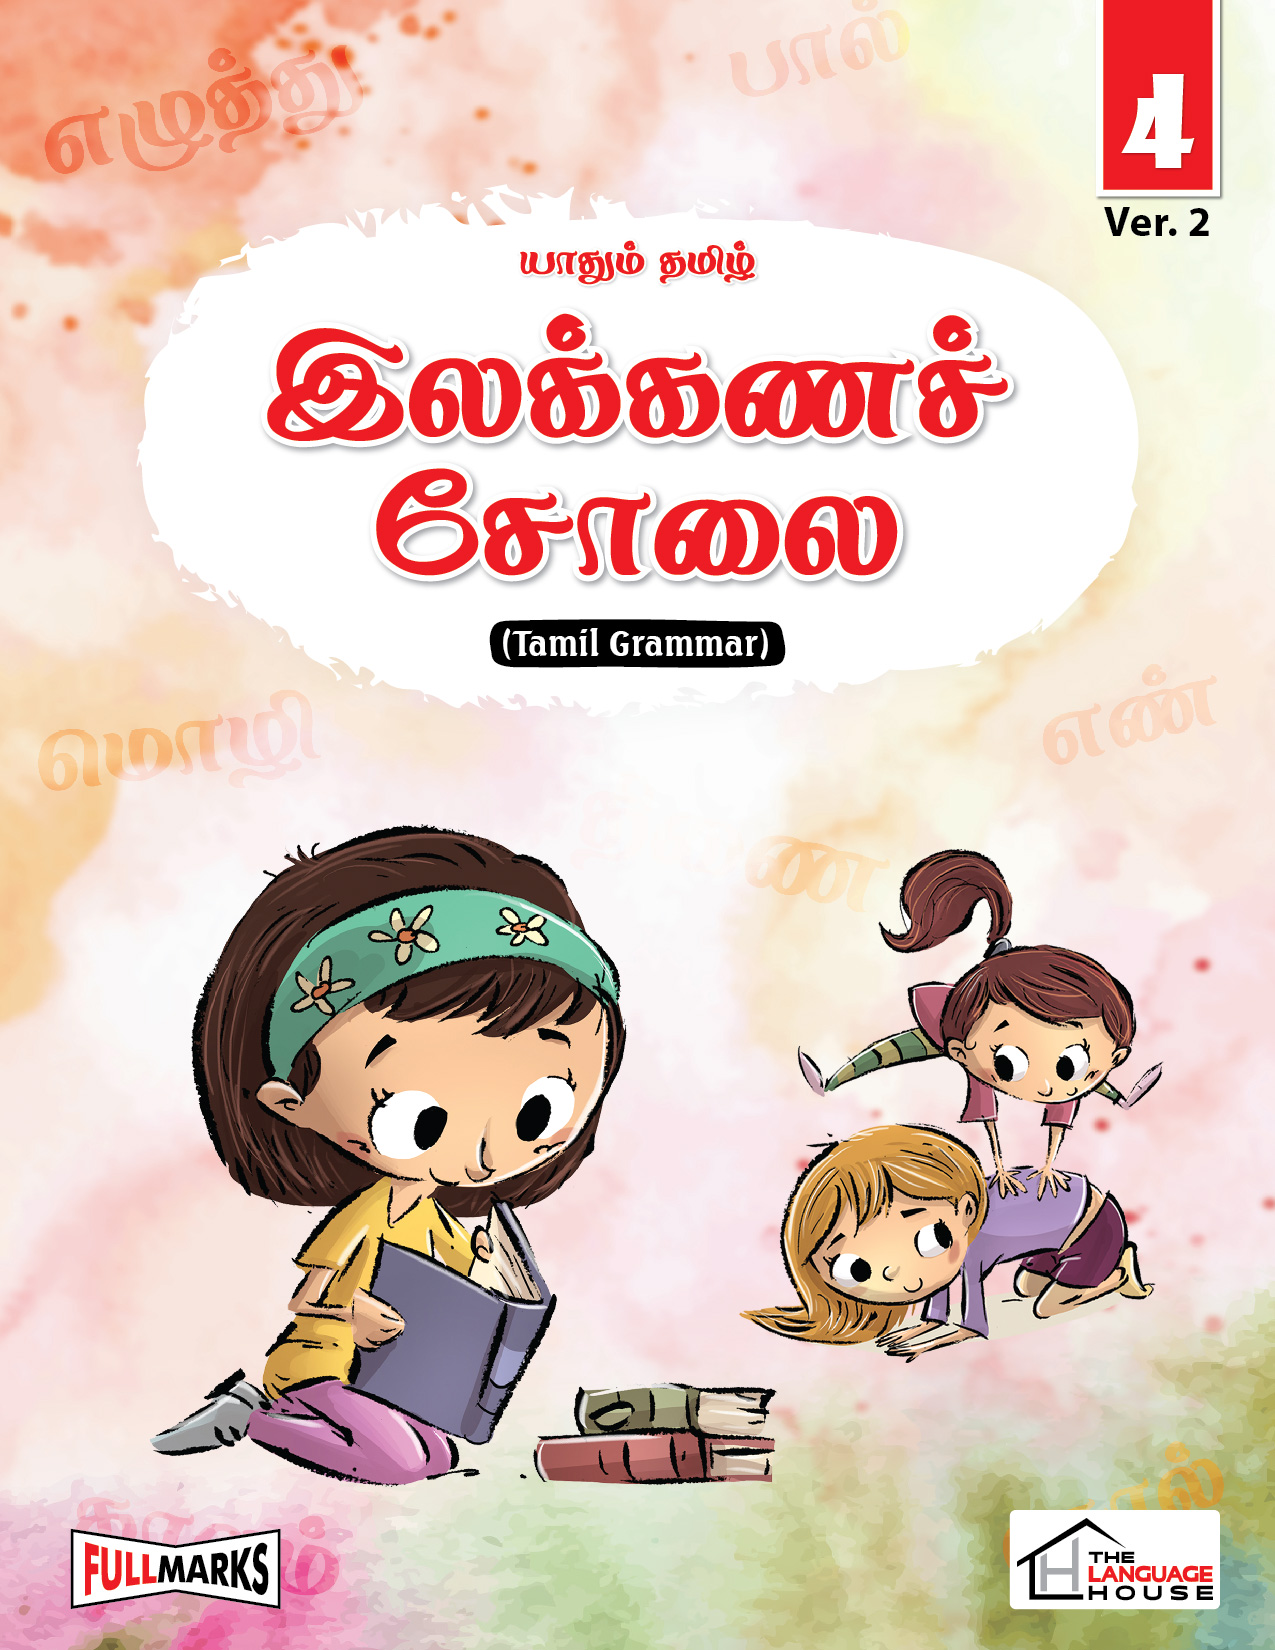 Tamil Grammar Ver. 2 Class 4